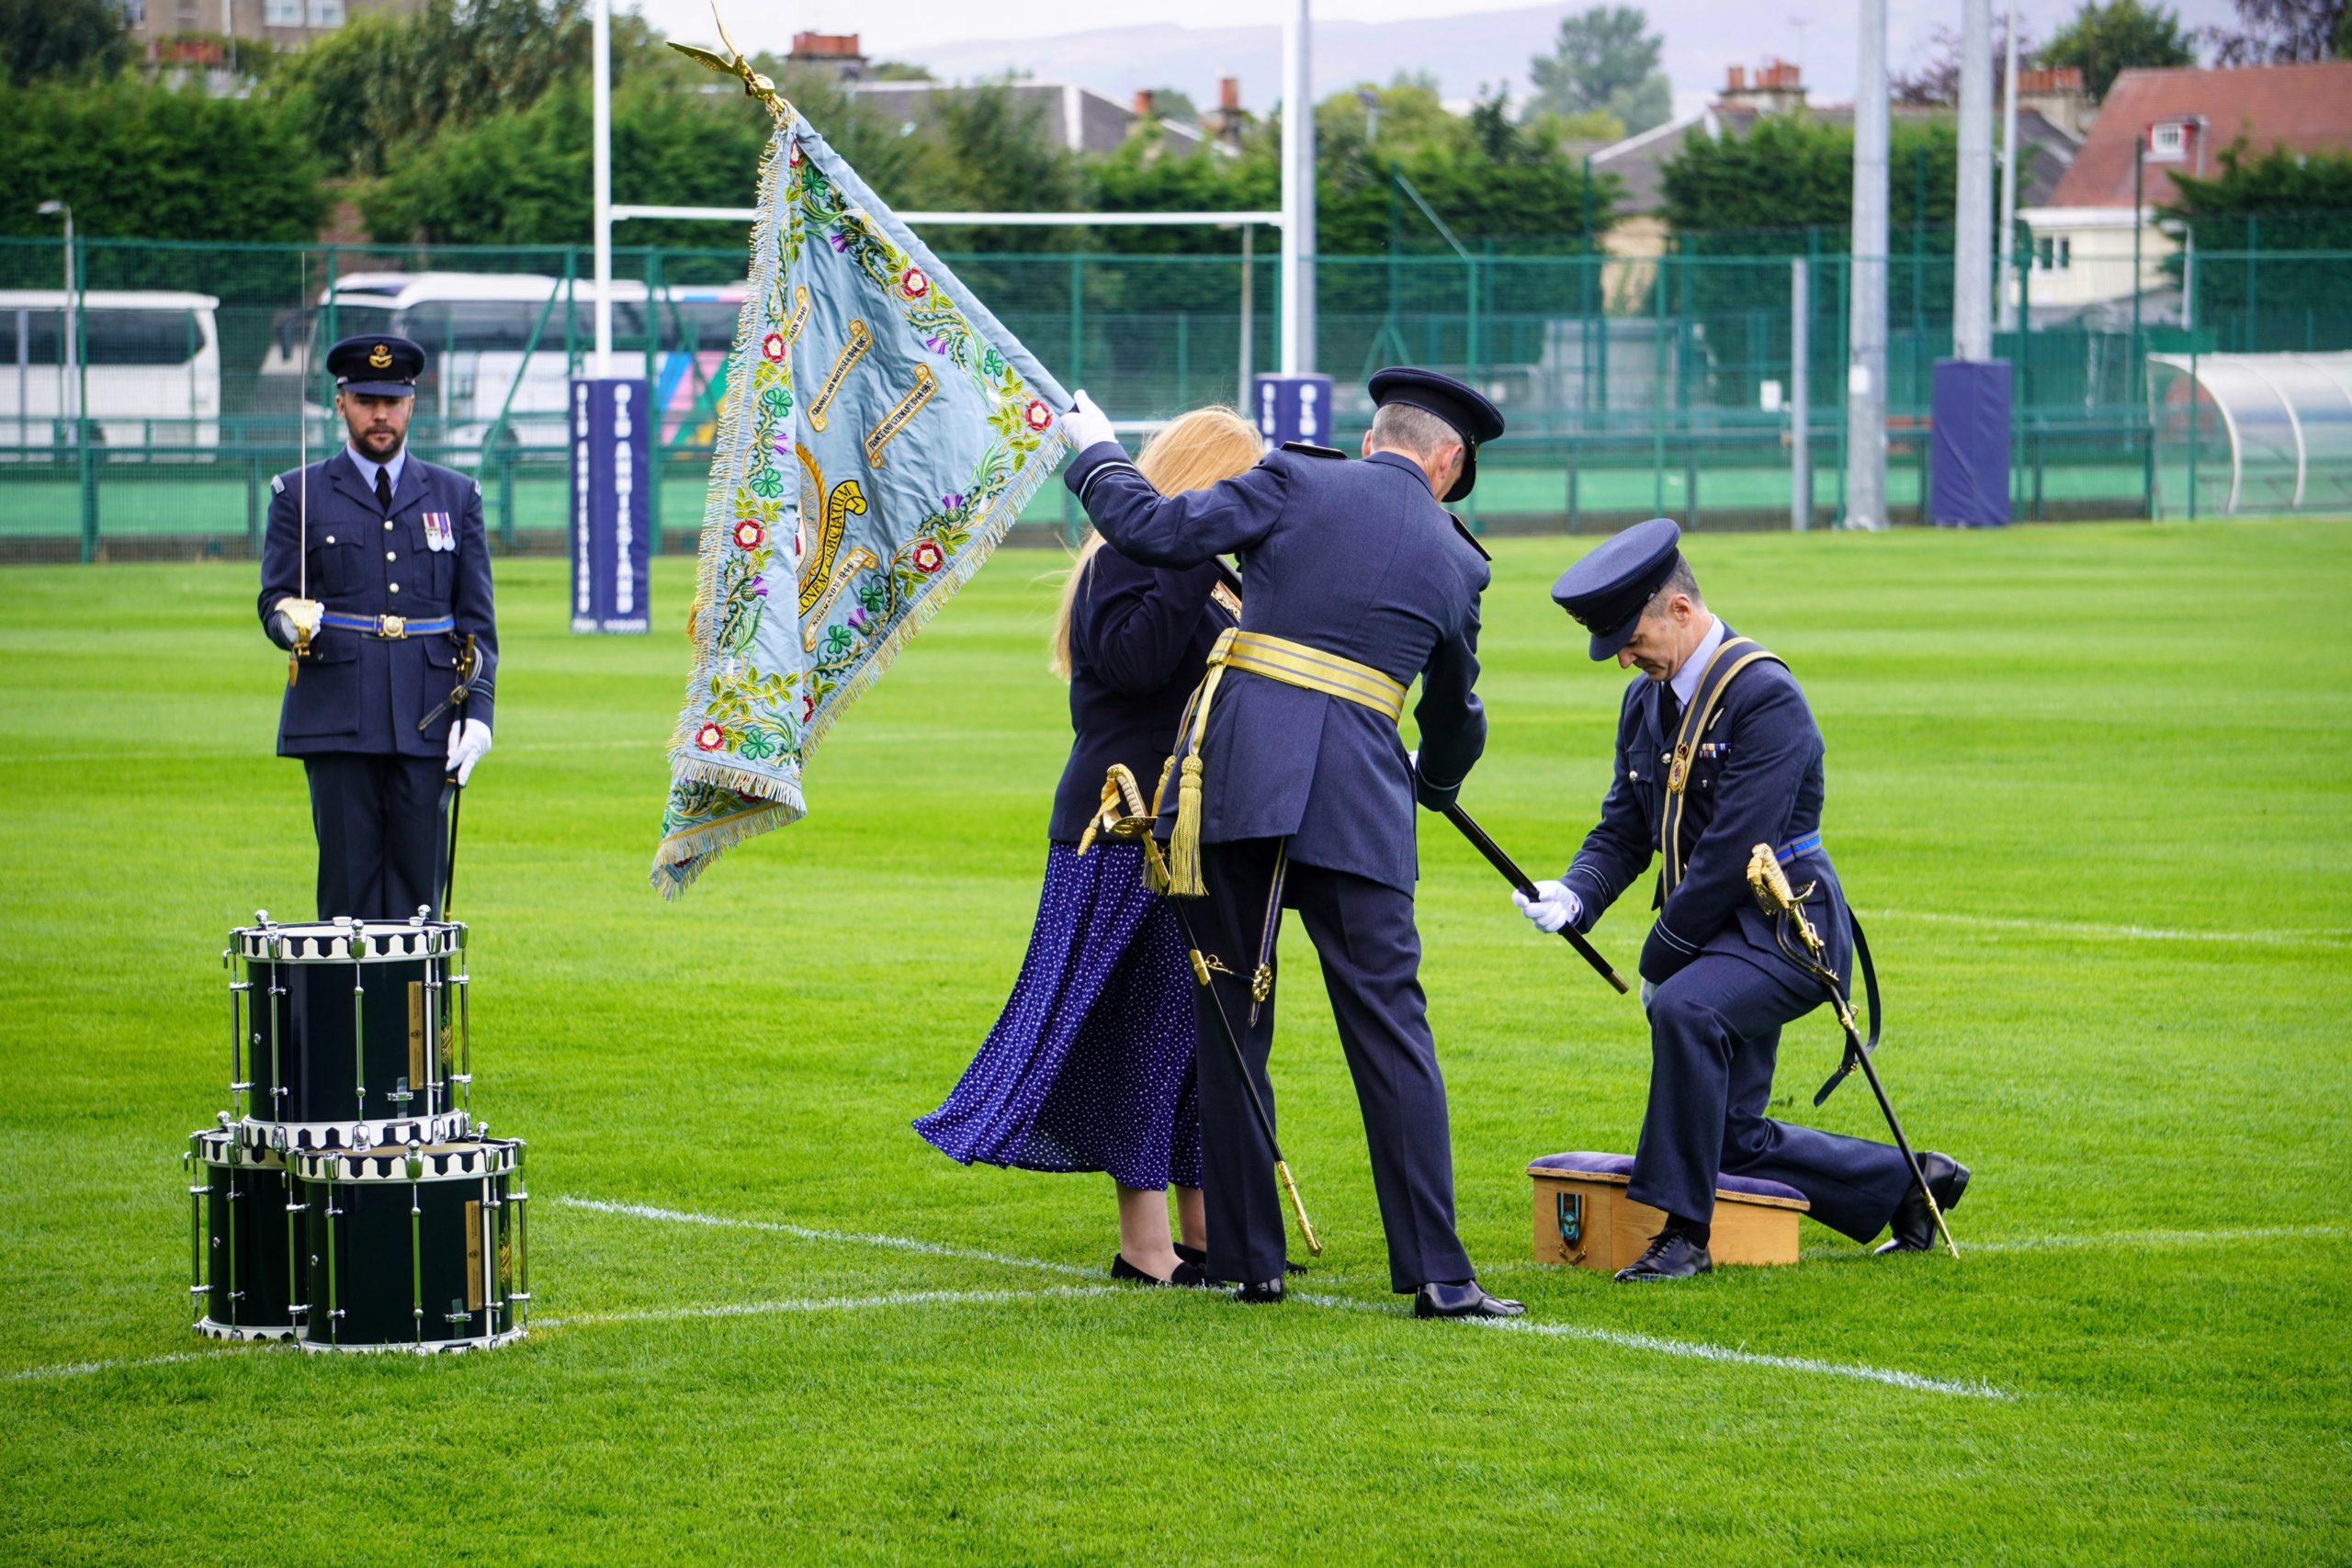 Members of RAF Reserves kneel to receive Colours